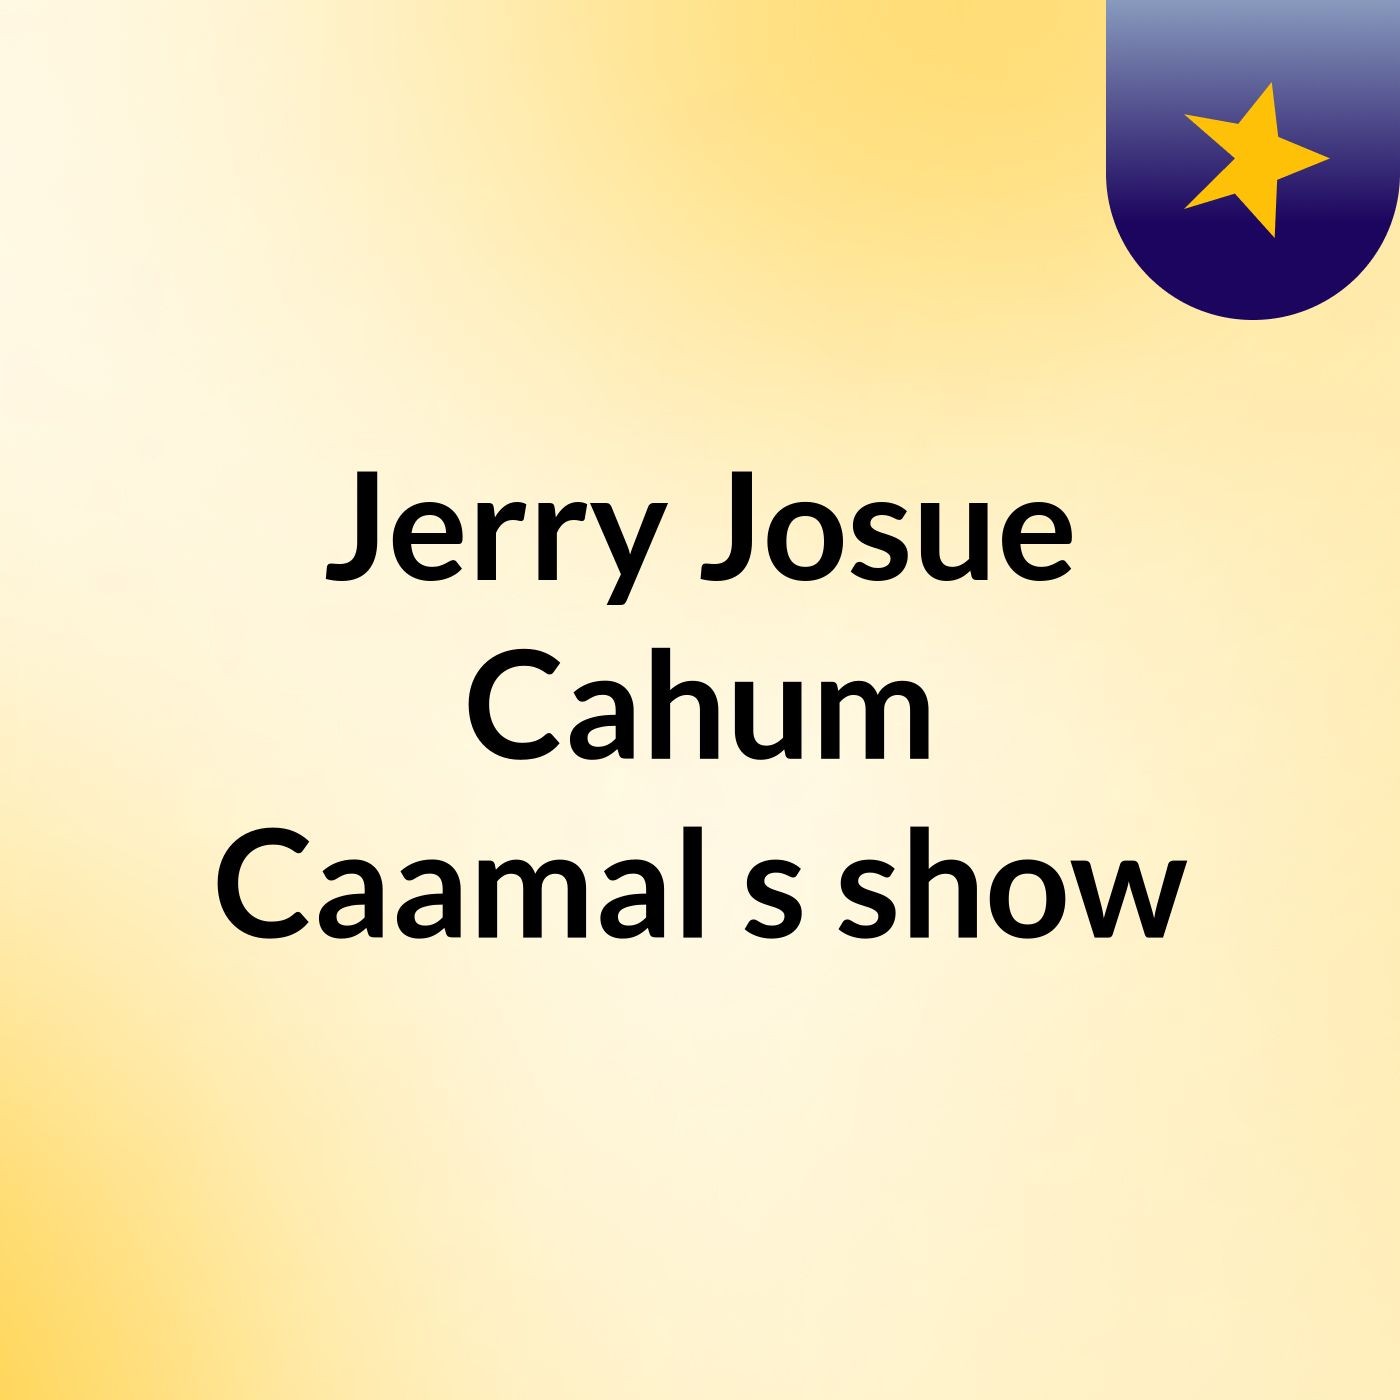 Jerry Josue Cahum Caamal's show